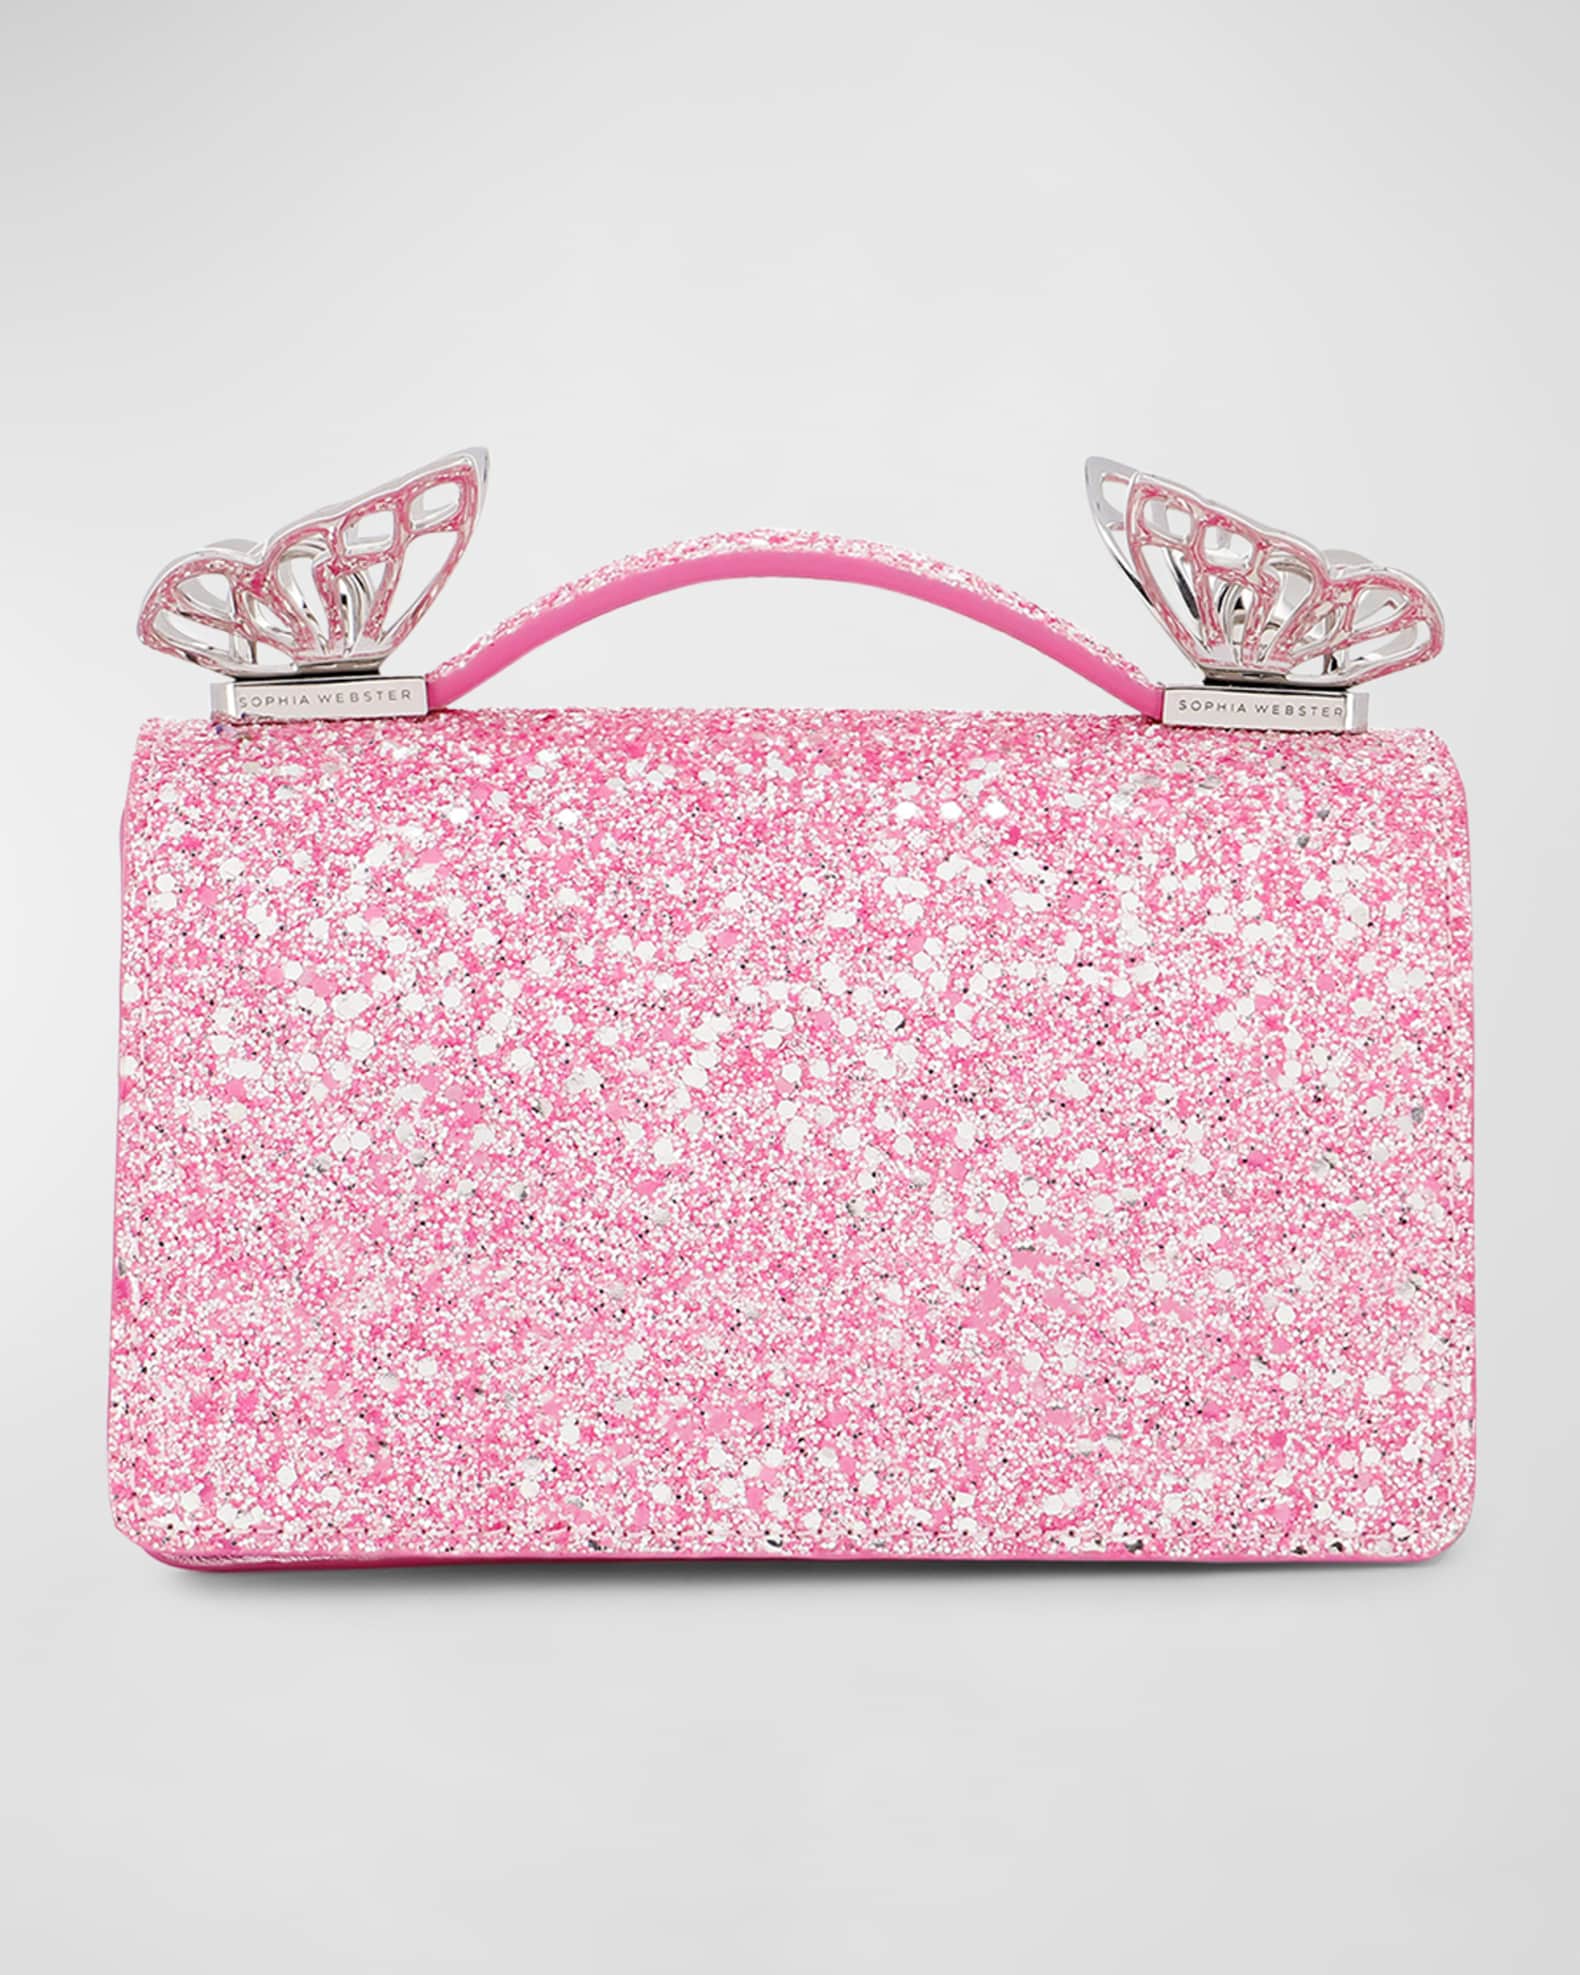 Sophia Webster Mariposa Mini Glitter Shoulder Bag | Neiman Marcus